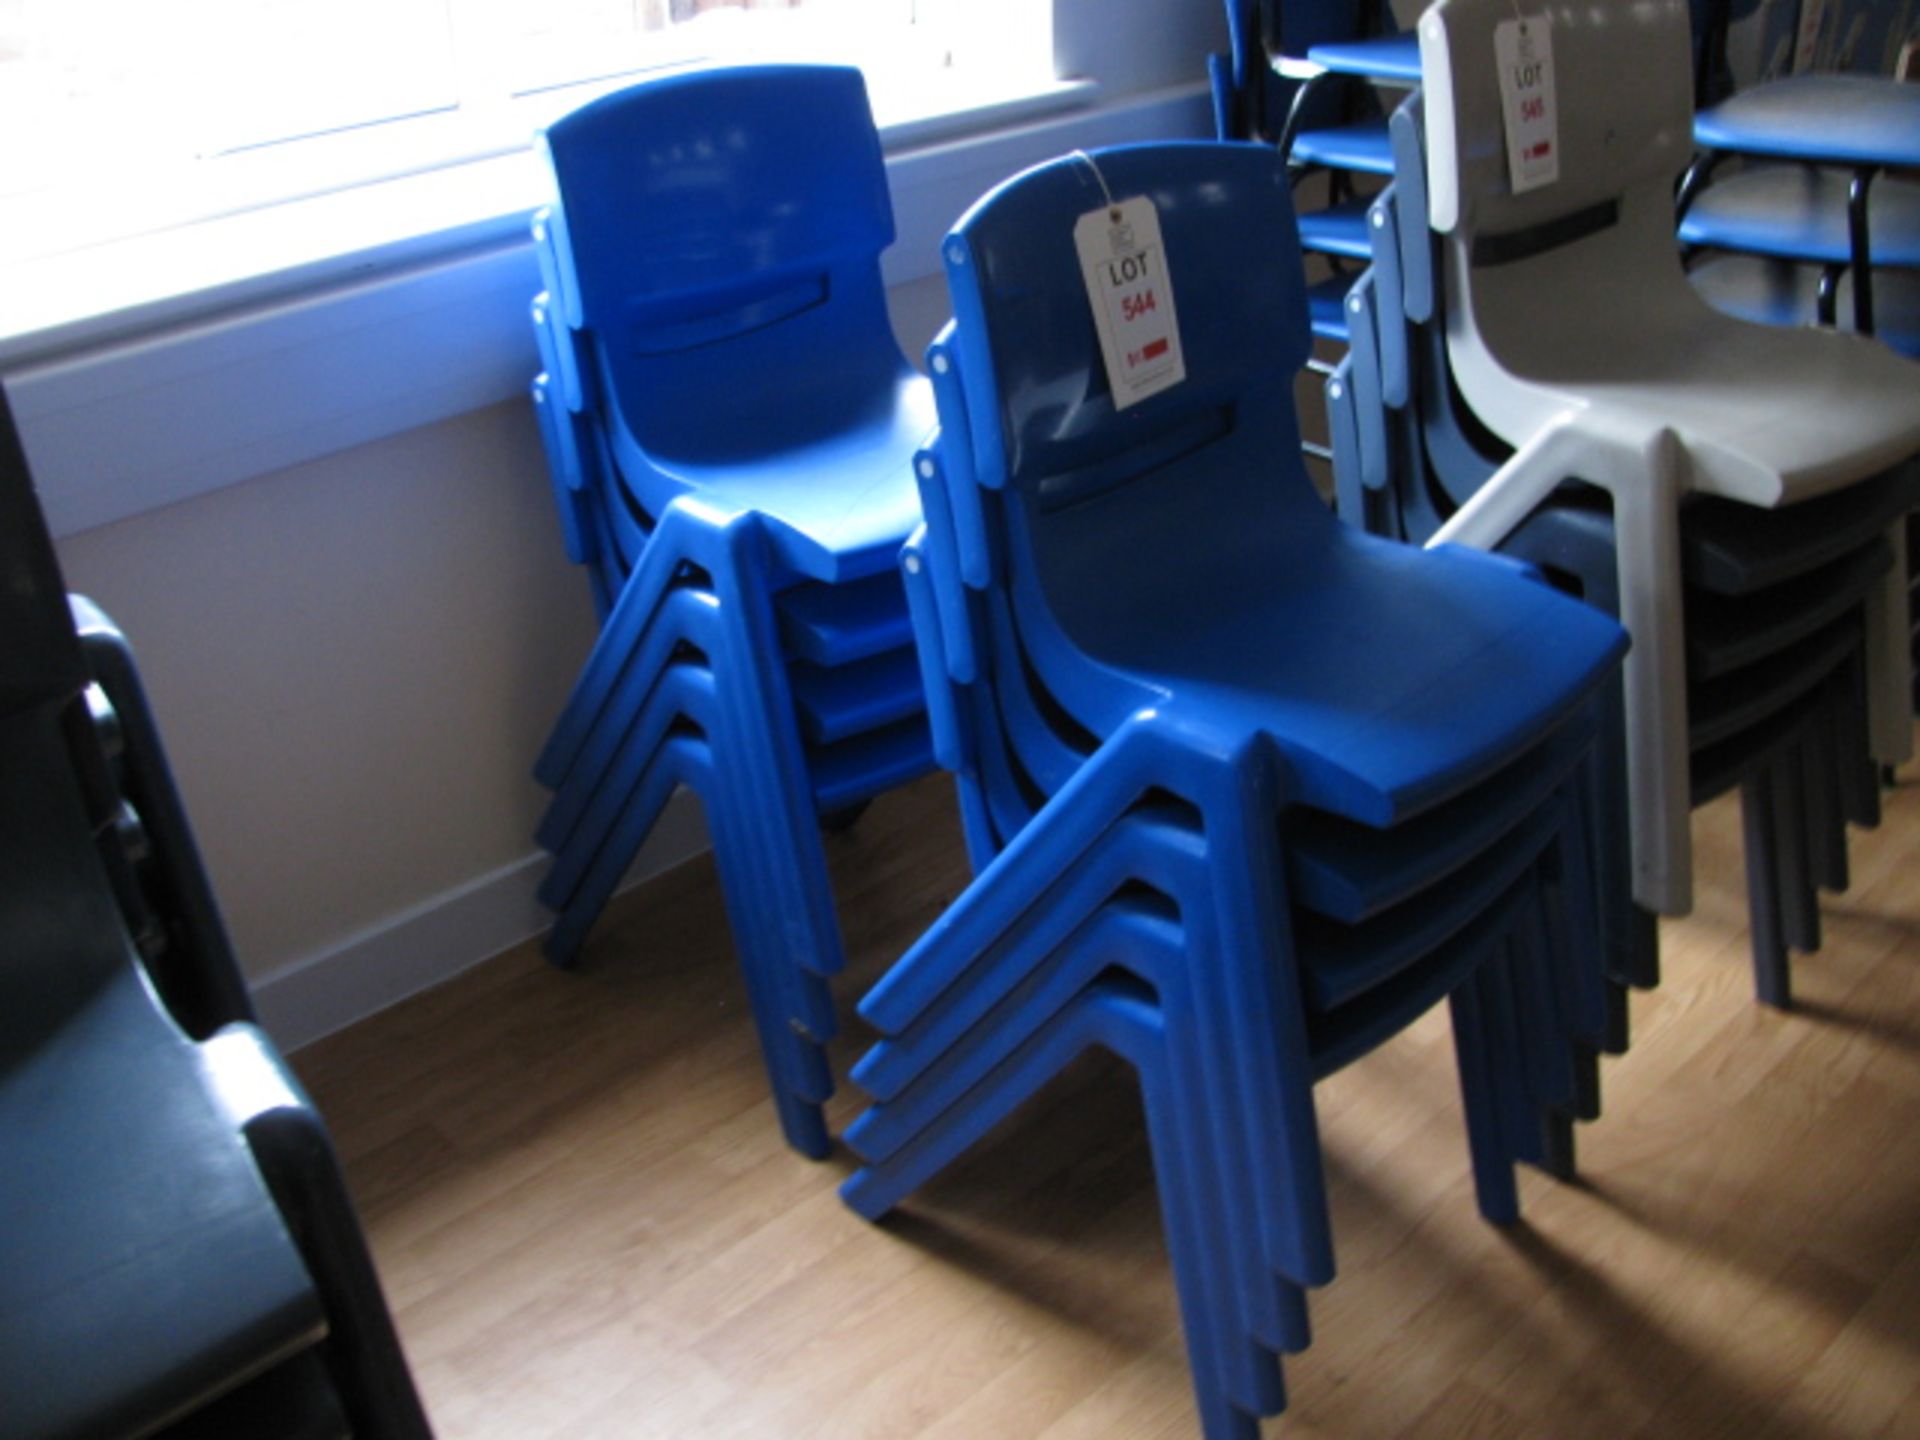 Eight Sebel Postura light blue plastic chairs